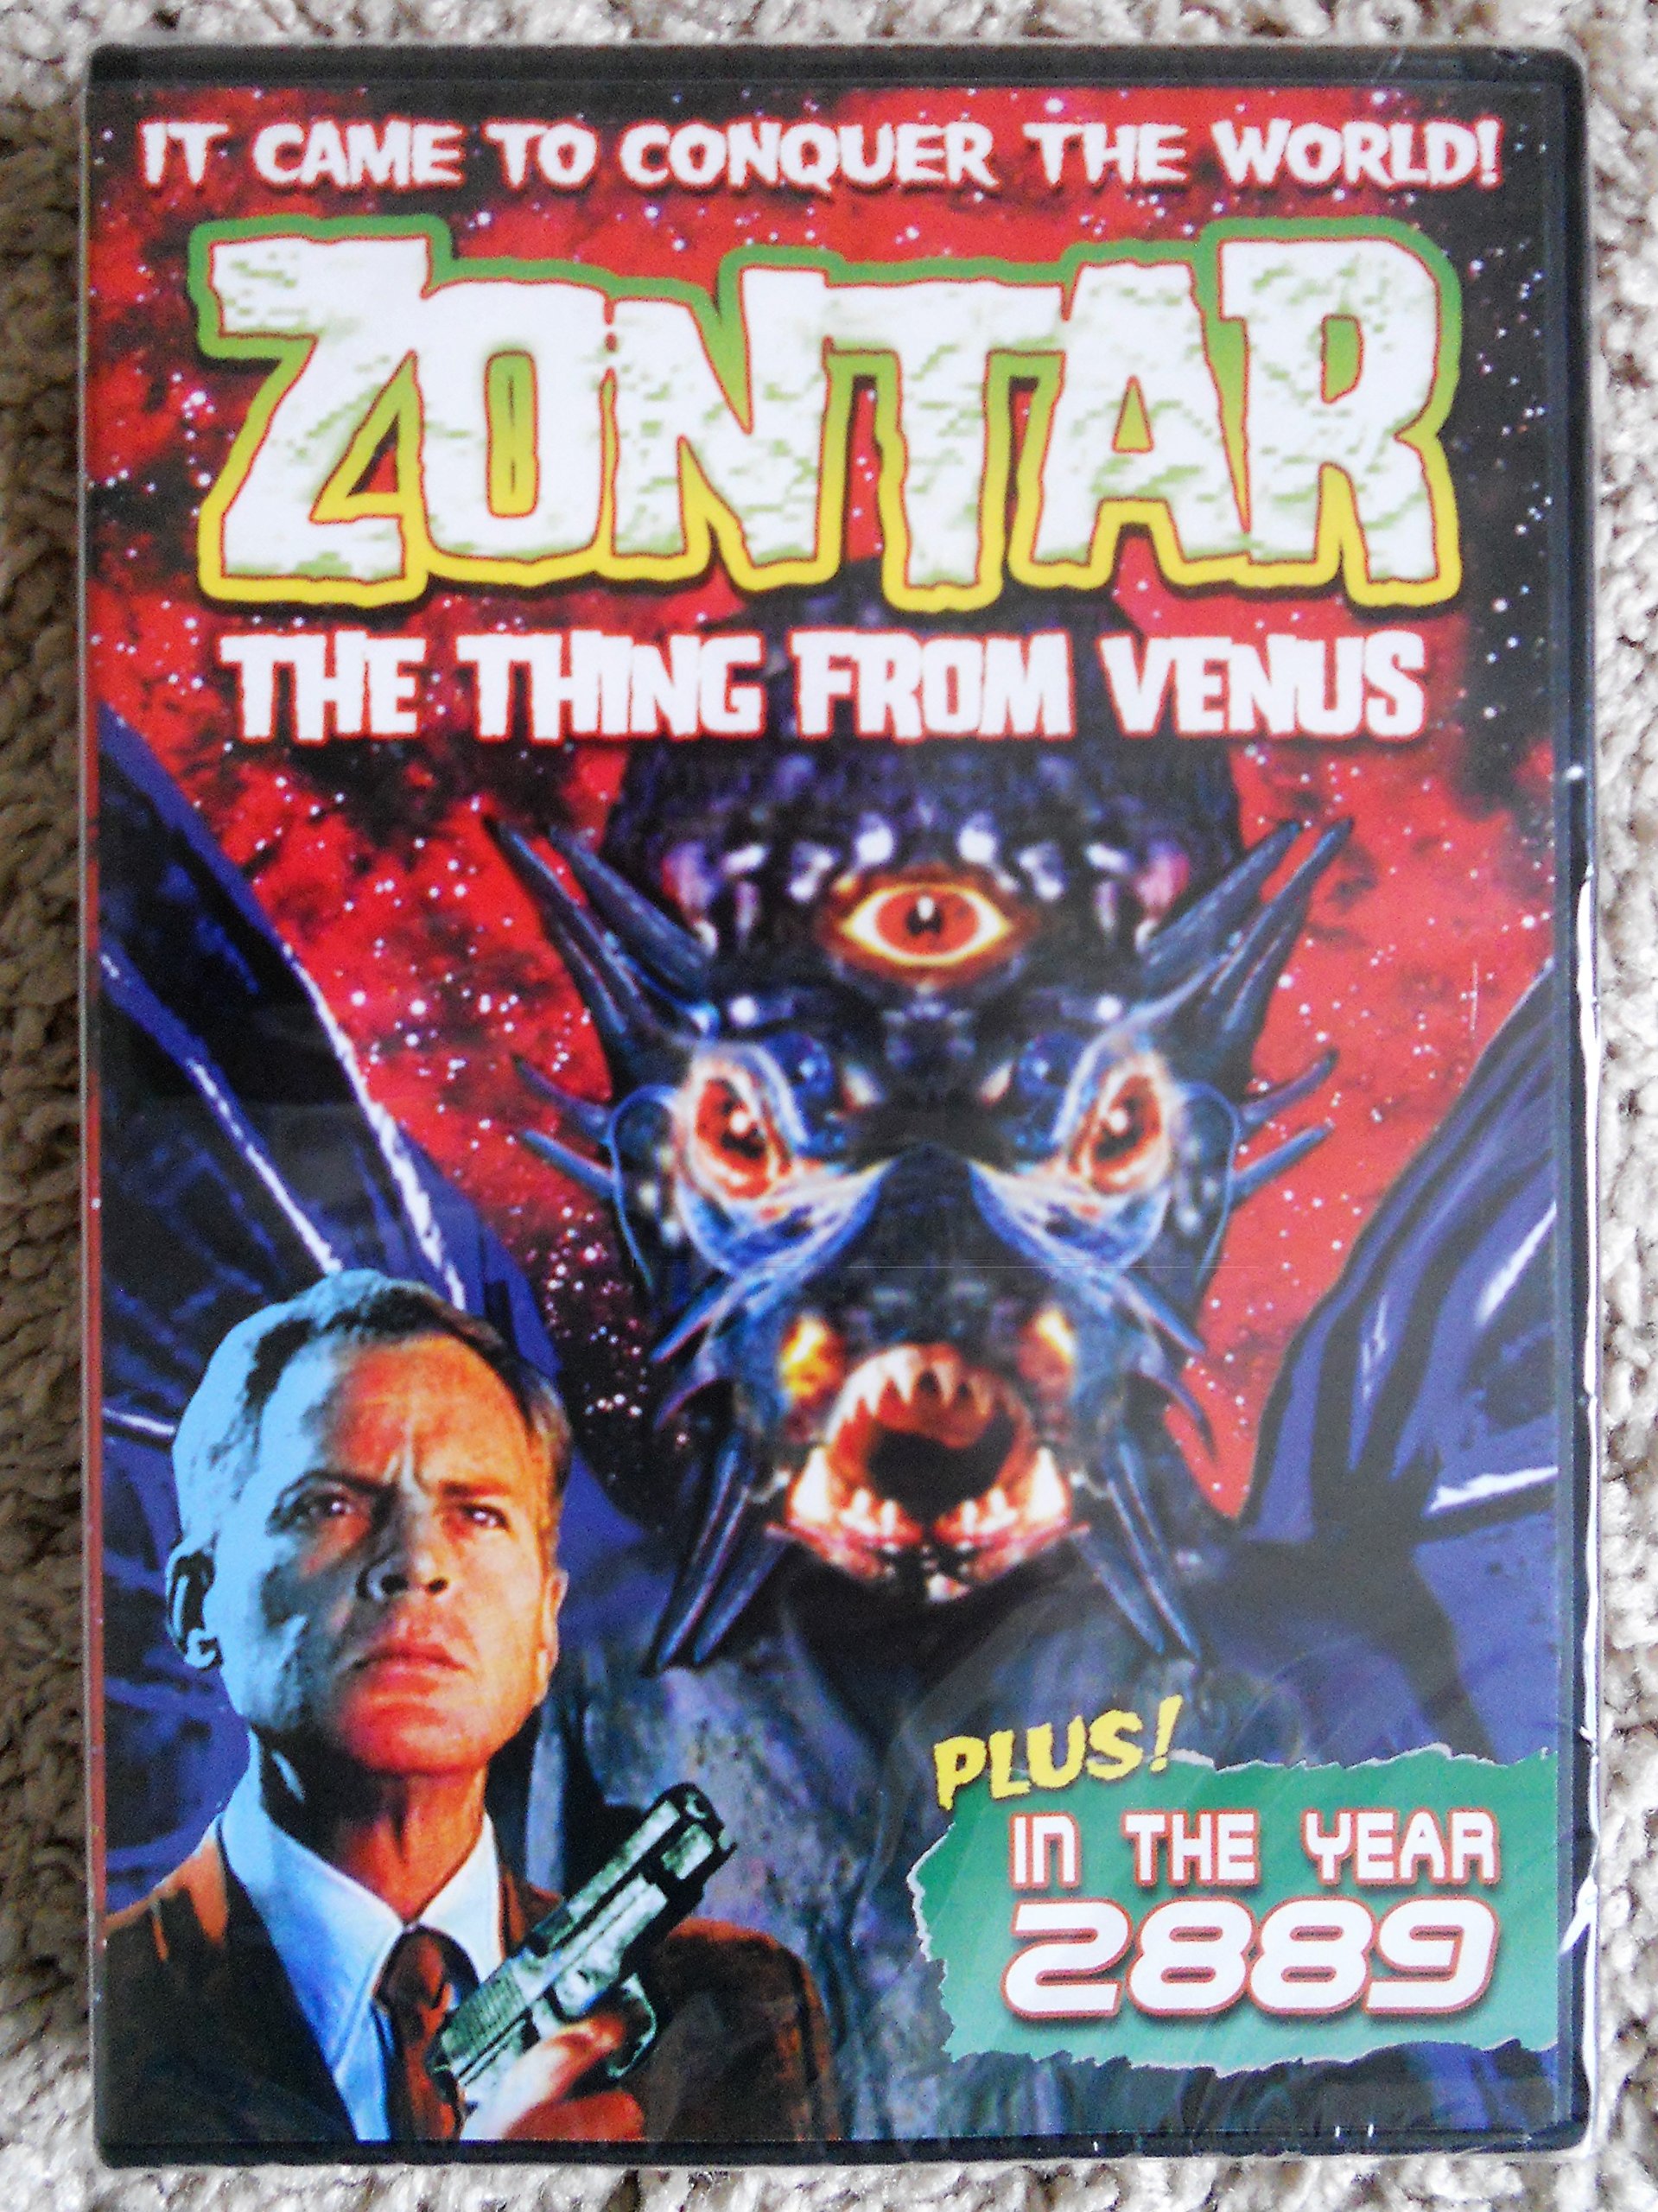 Zontar the Thing from Venus (1967) starring John Agar